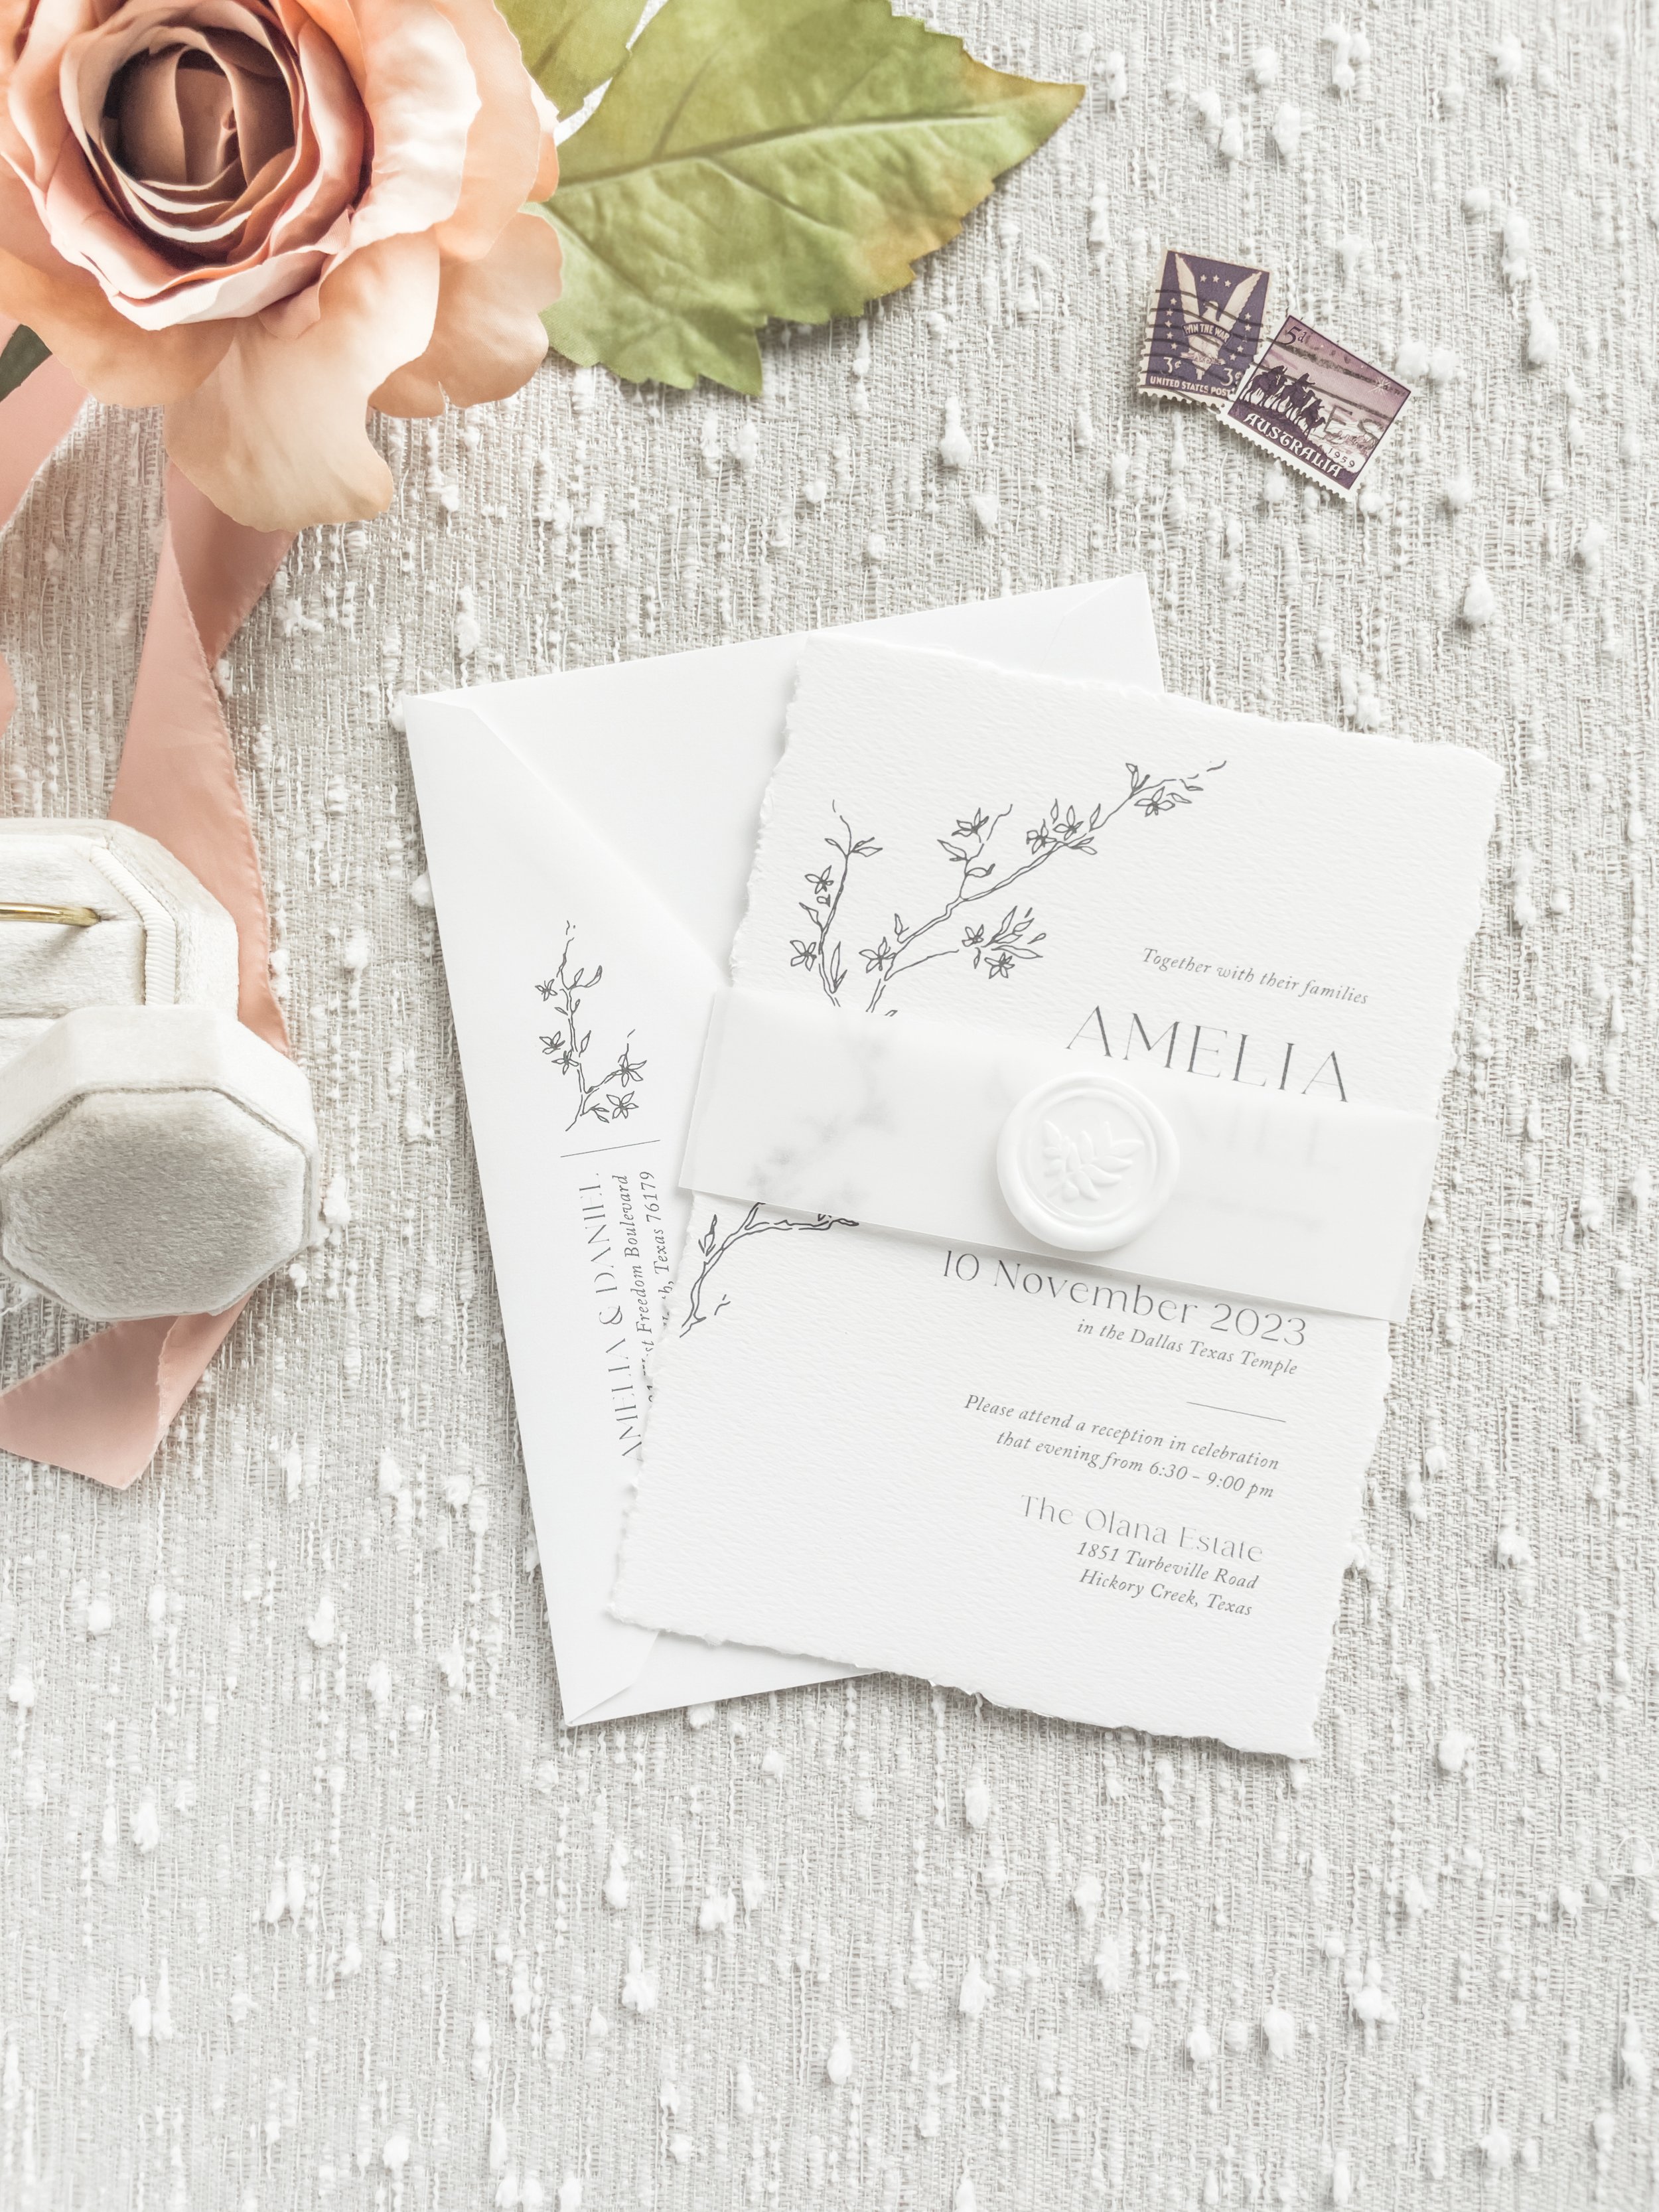 Anthology Print Wedding Invitations - Deckle Hand Torn Edge Wedding Invitaitons - luxury wedding invitations6.jpg